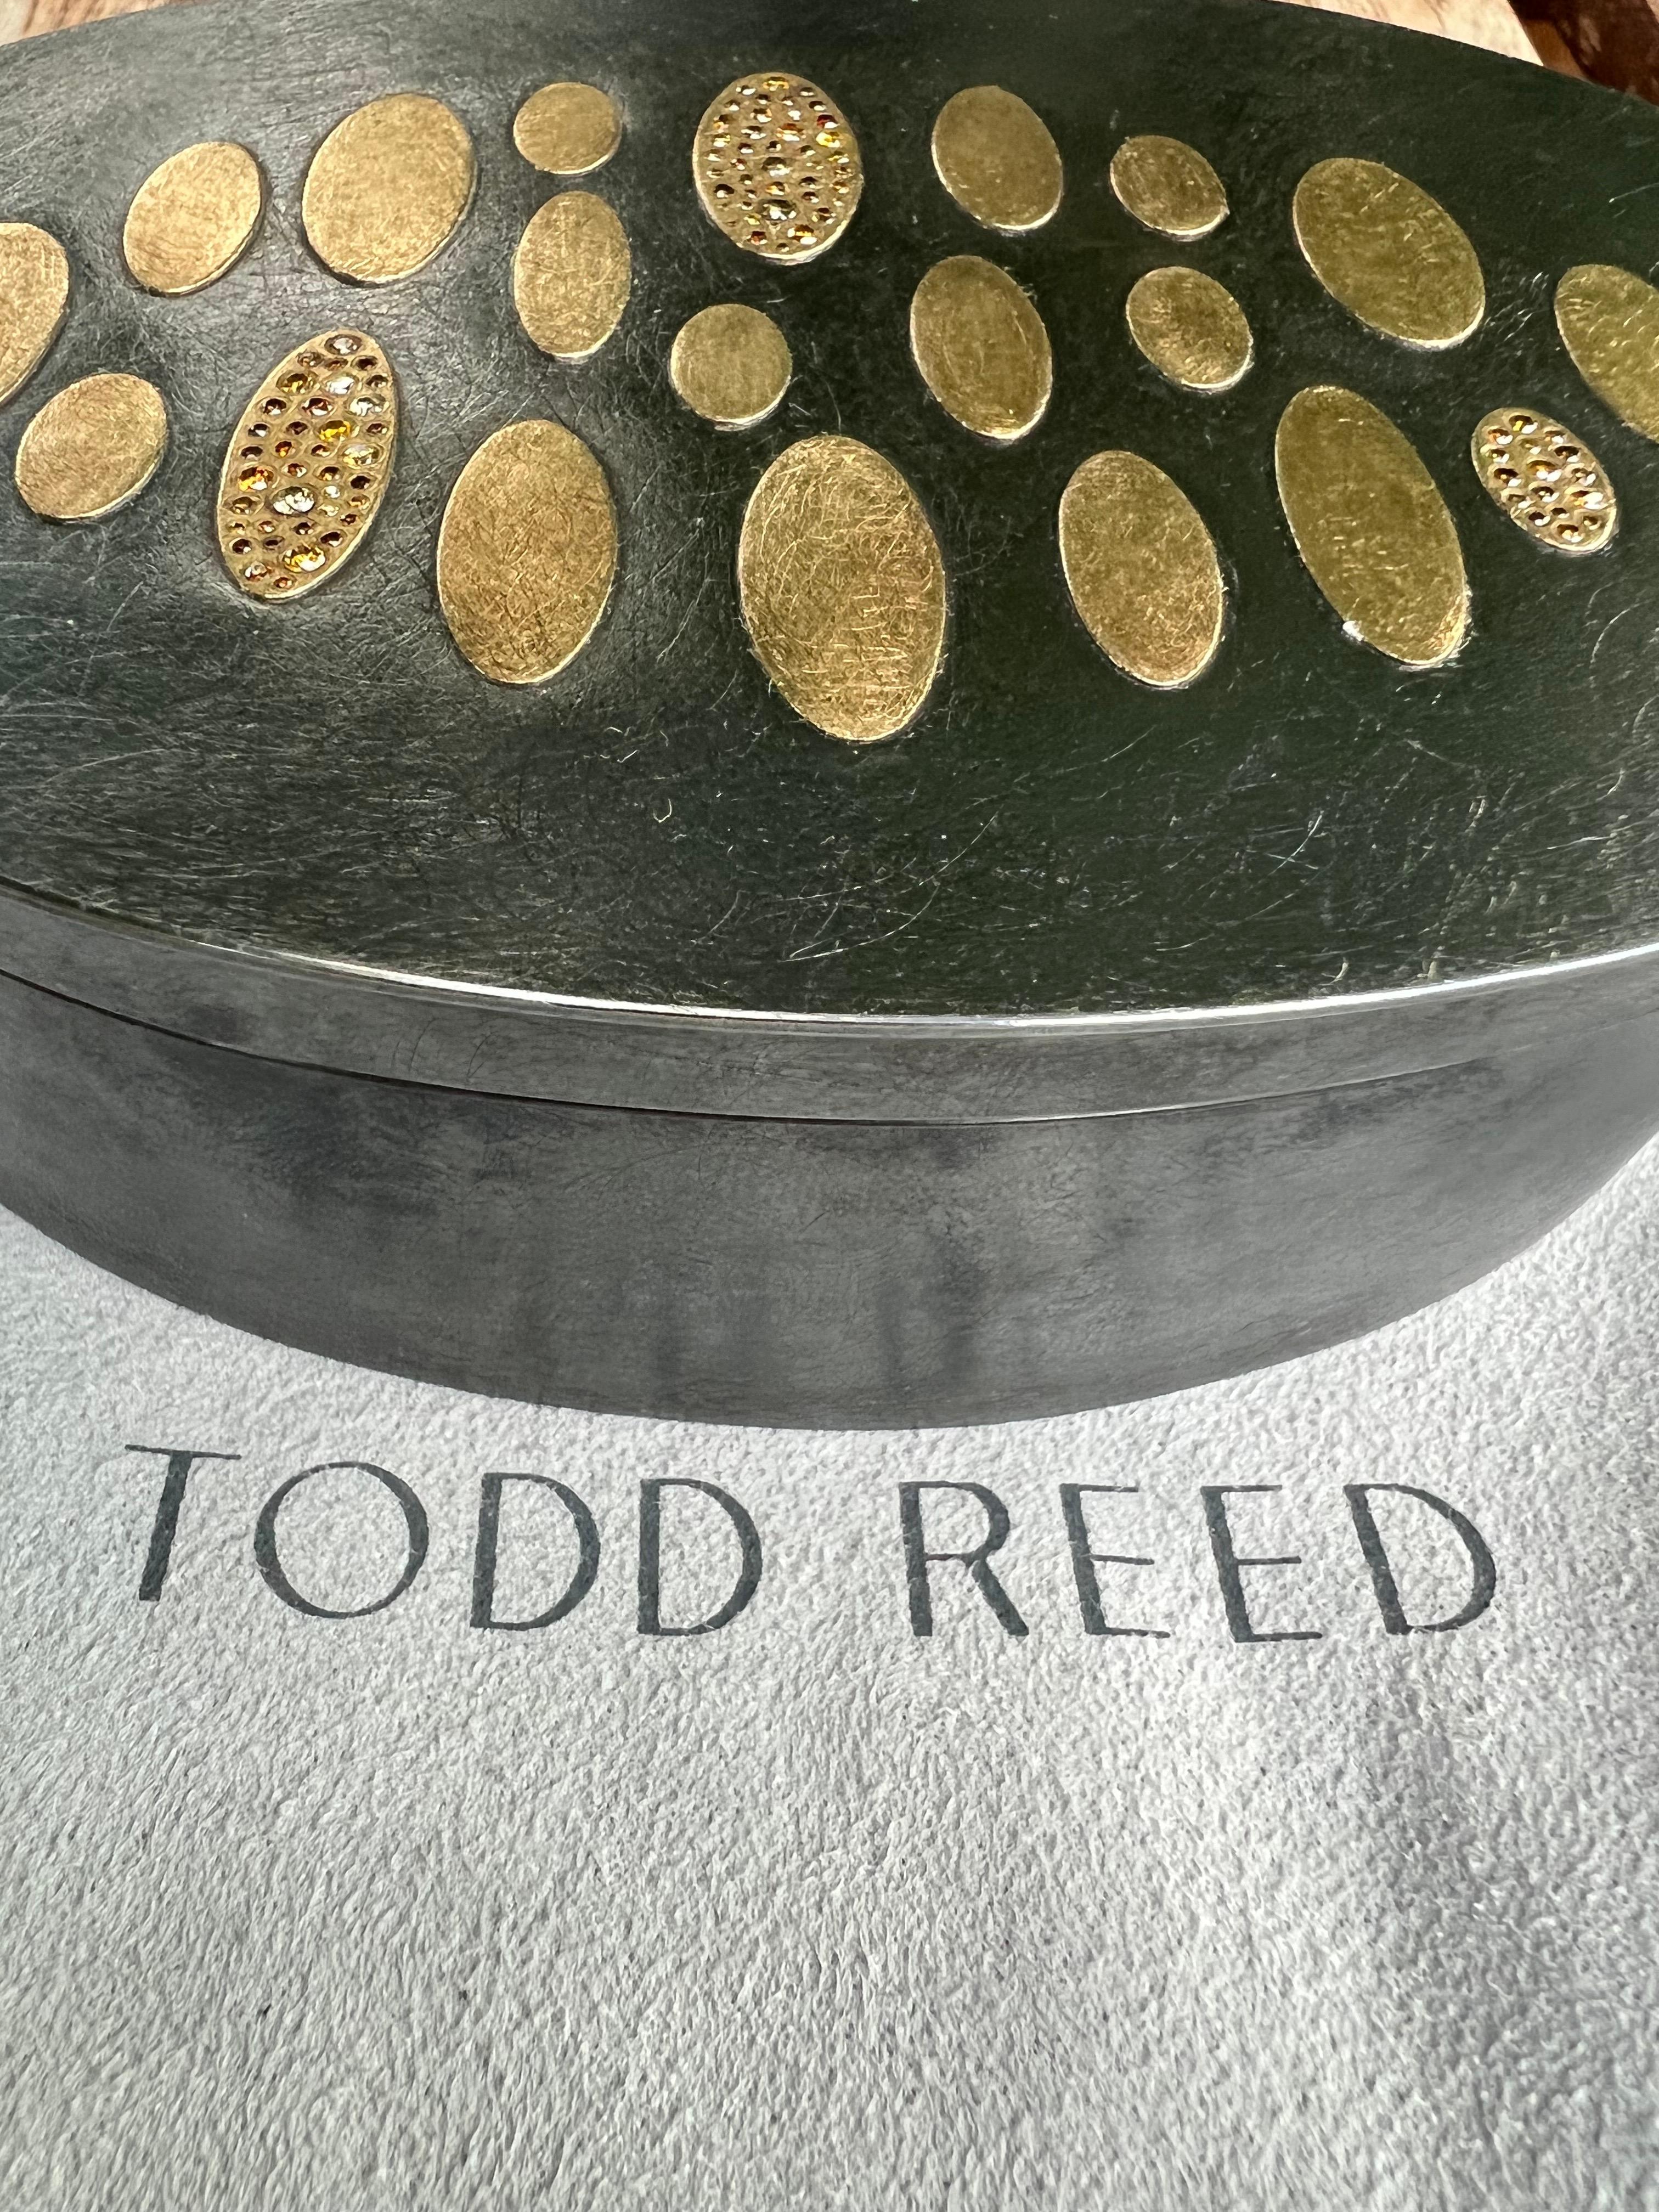 todd reed boulder